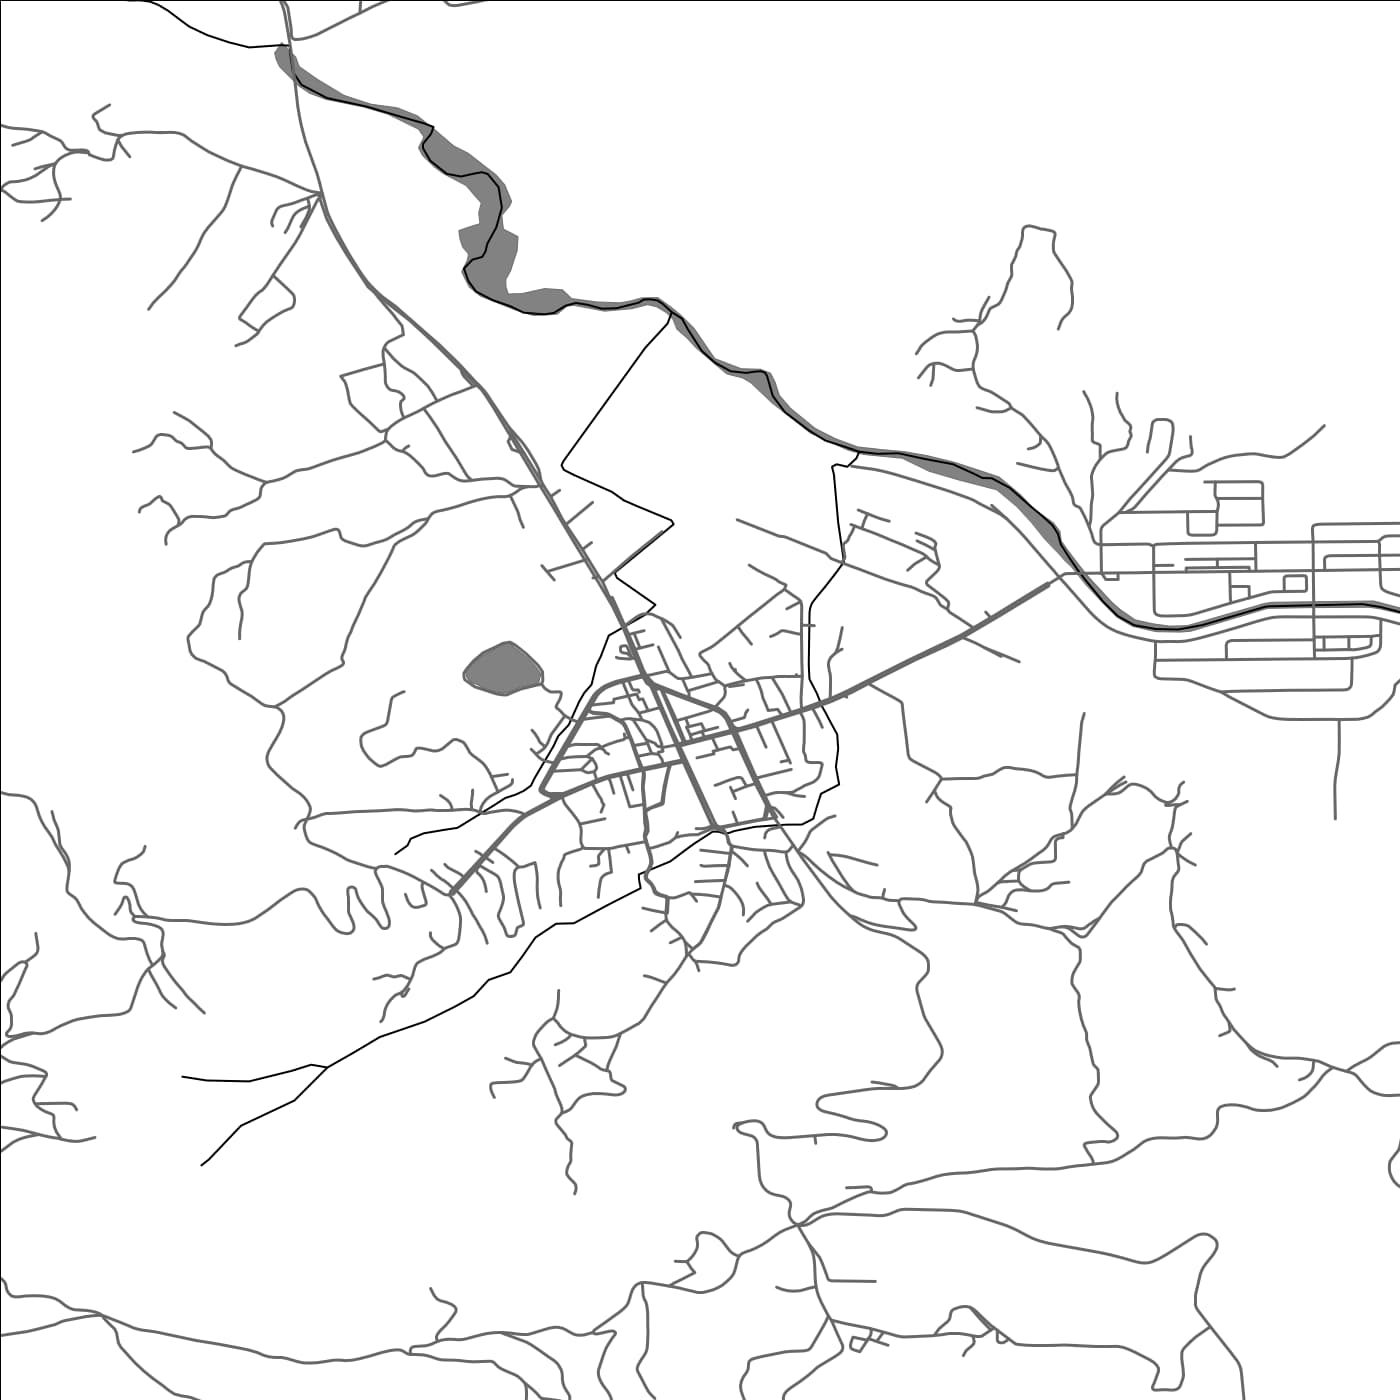 ROAD MAP OF BALLSH, ALBANIA BY MAPBAKES